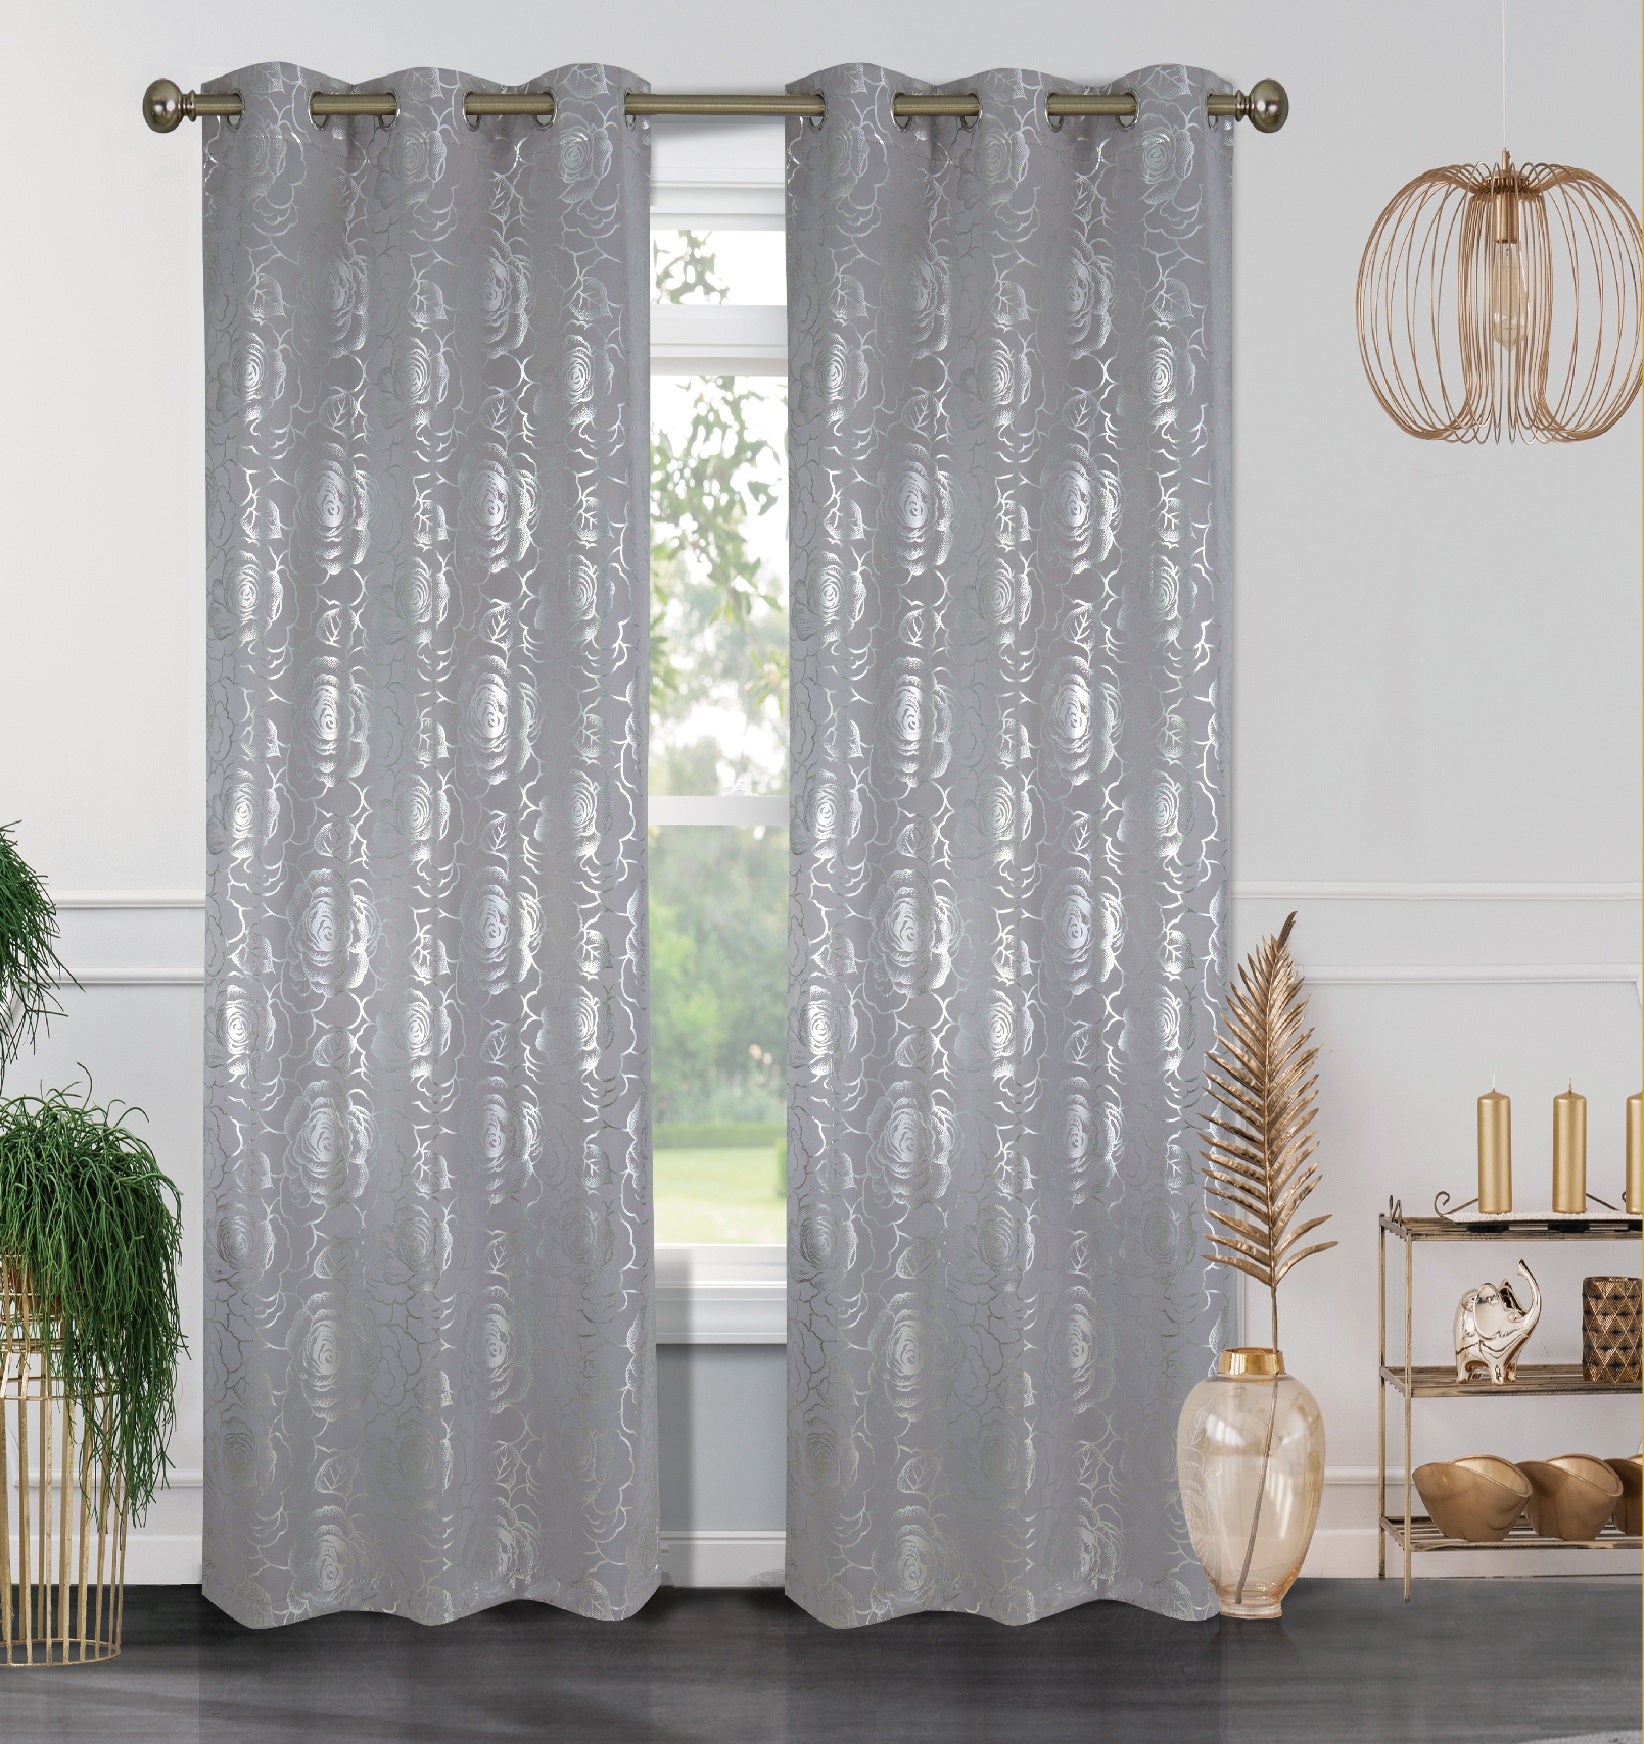 Floral Metallic  Blackout Thermal Grommet Curtain Panels (Set of 2)